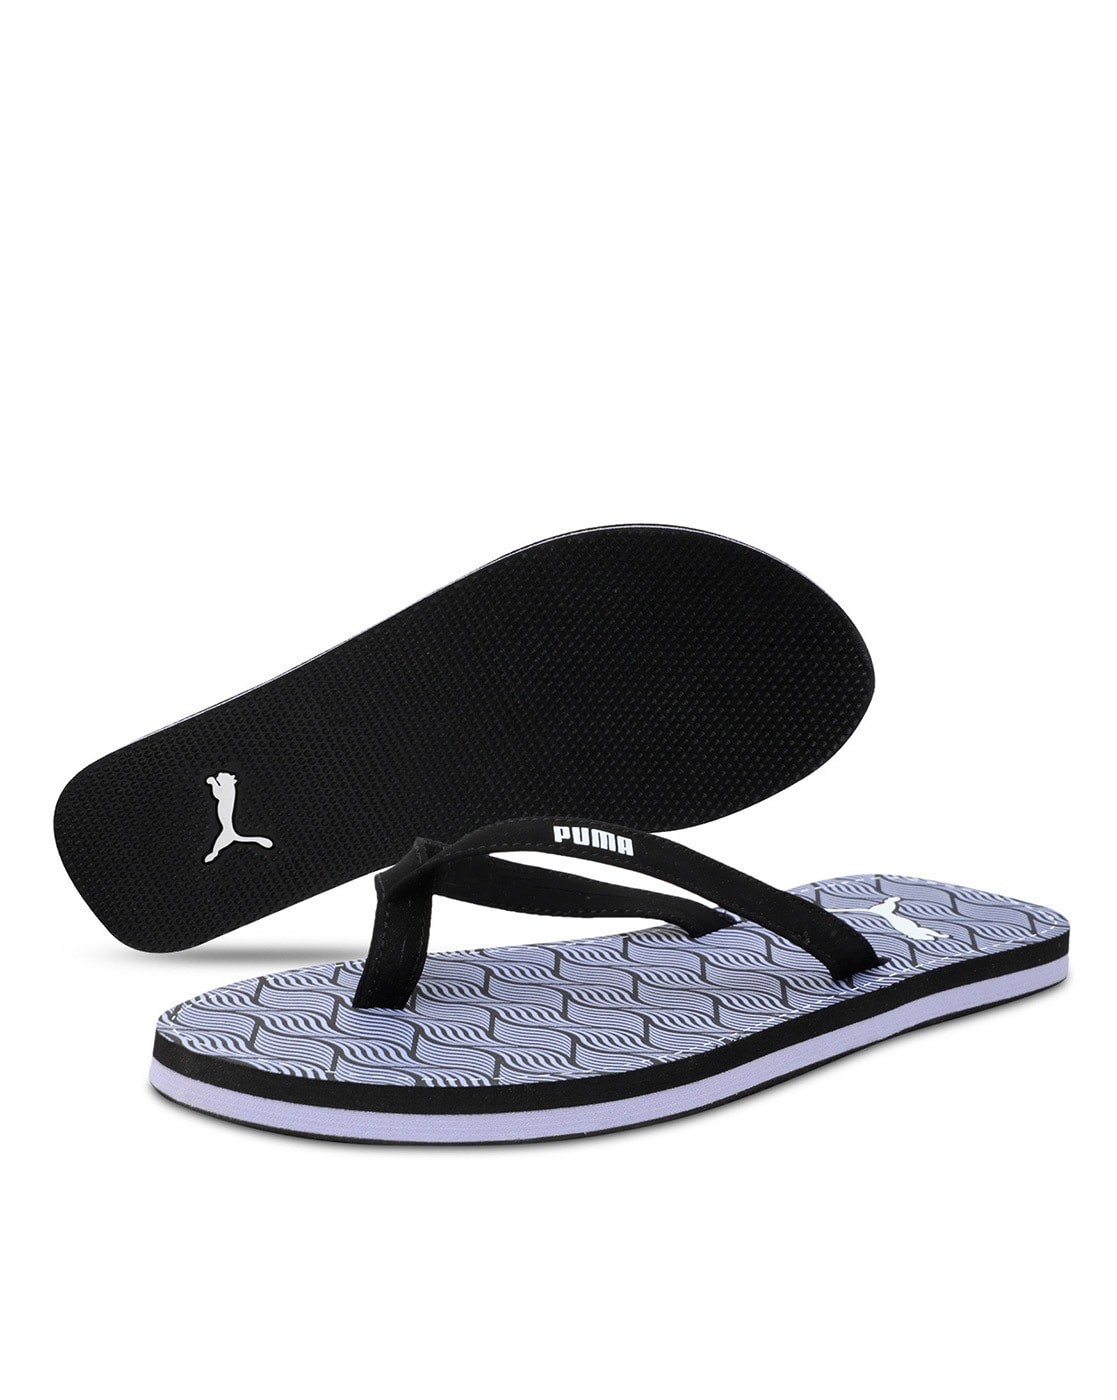 puma slippers for women online